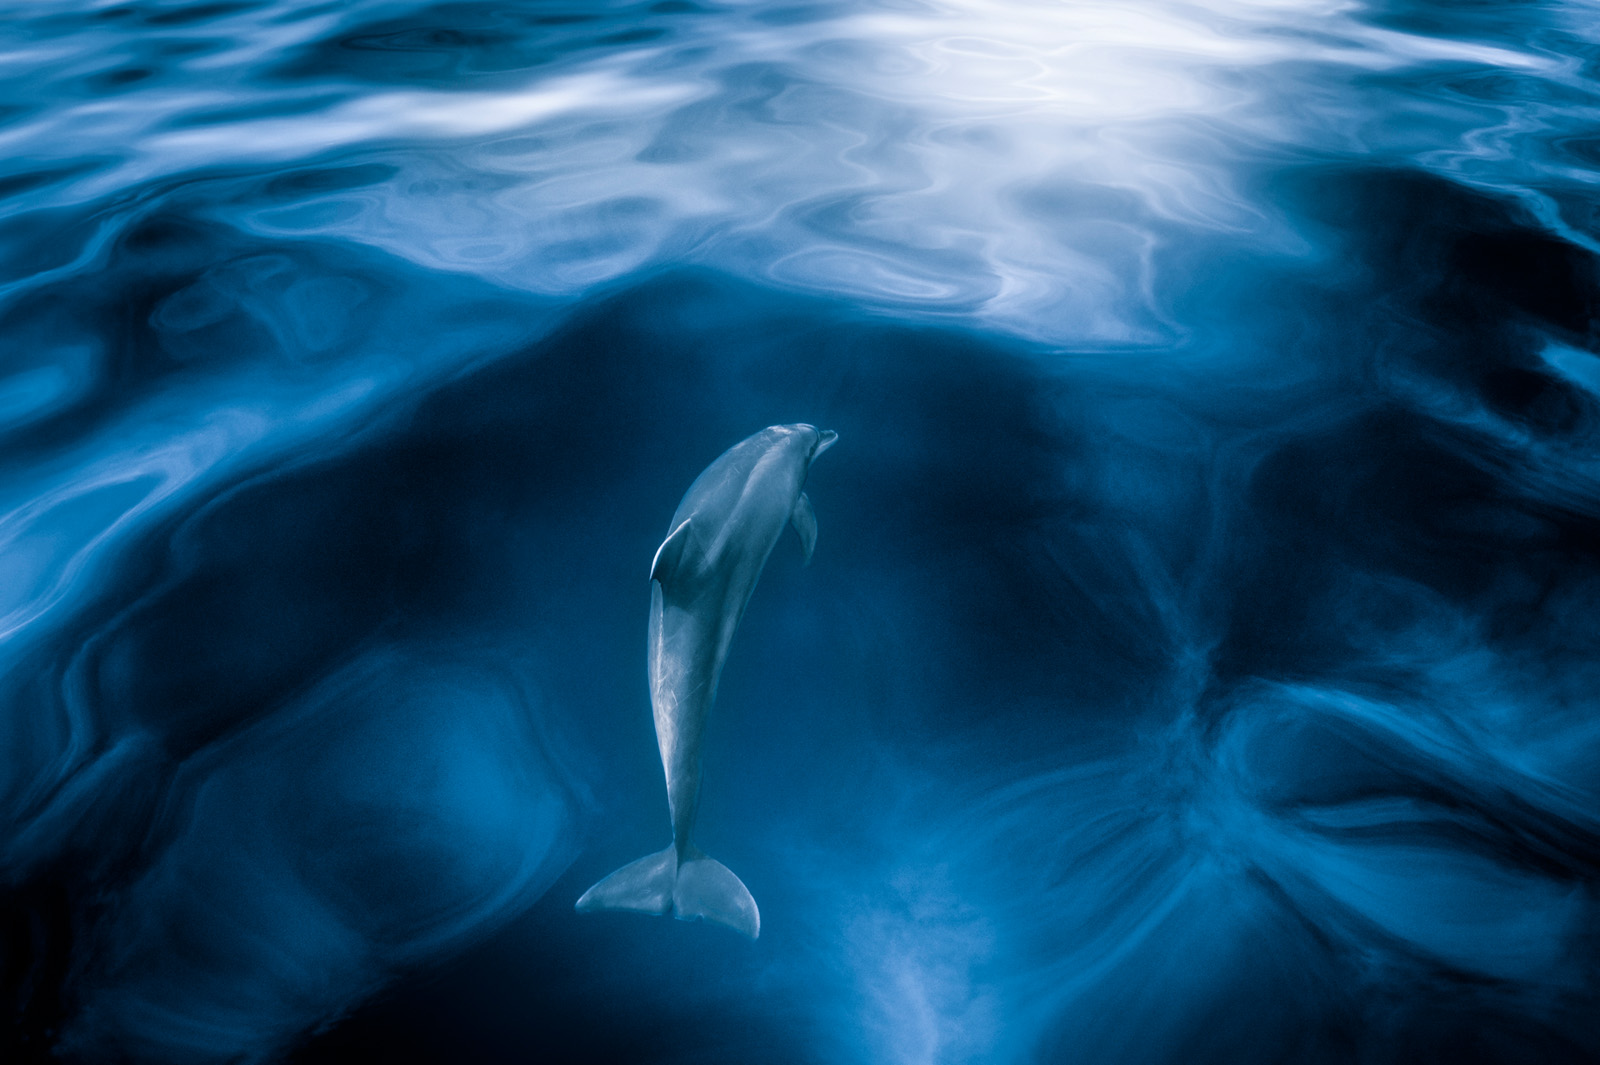 Příběhy divokého oceánu / Wild Ocean Stories © George Karbus: Delfín skákavý si užívá klidné hladiny v ranním rozbřesku u ostrova Tennerife / Bottlenose dolphin enjoys the calm water surface at sunrise near Tenerife